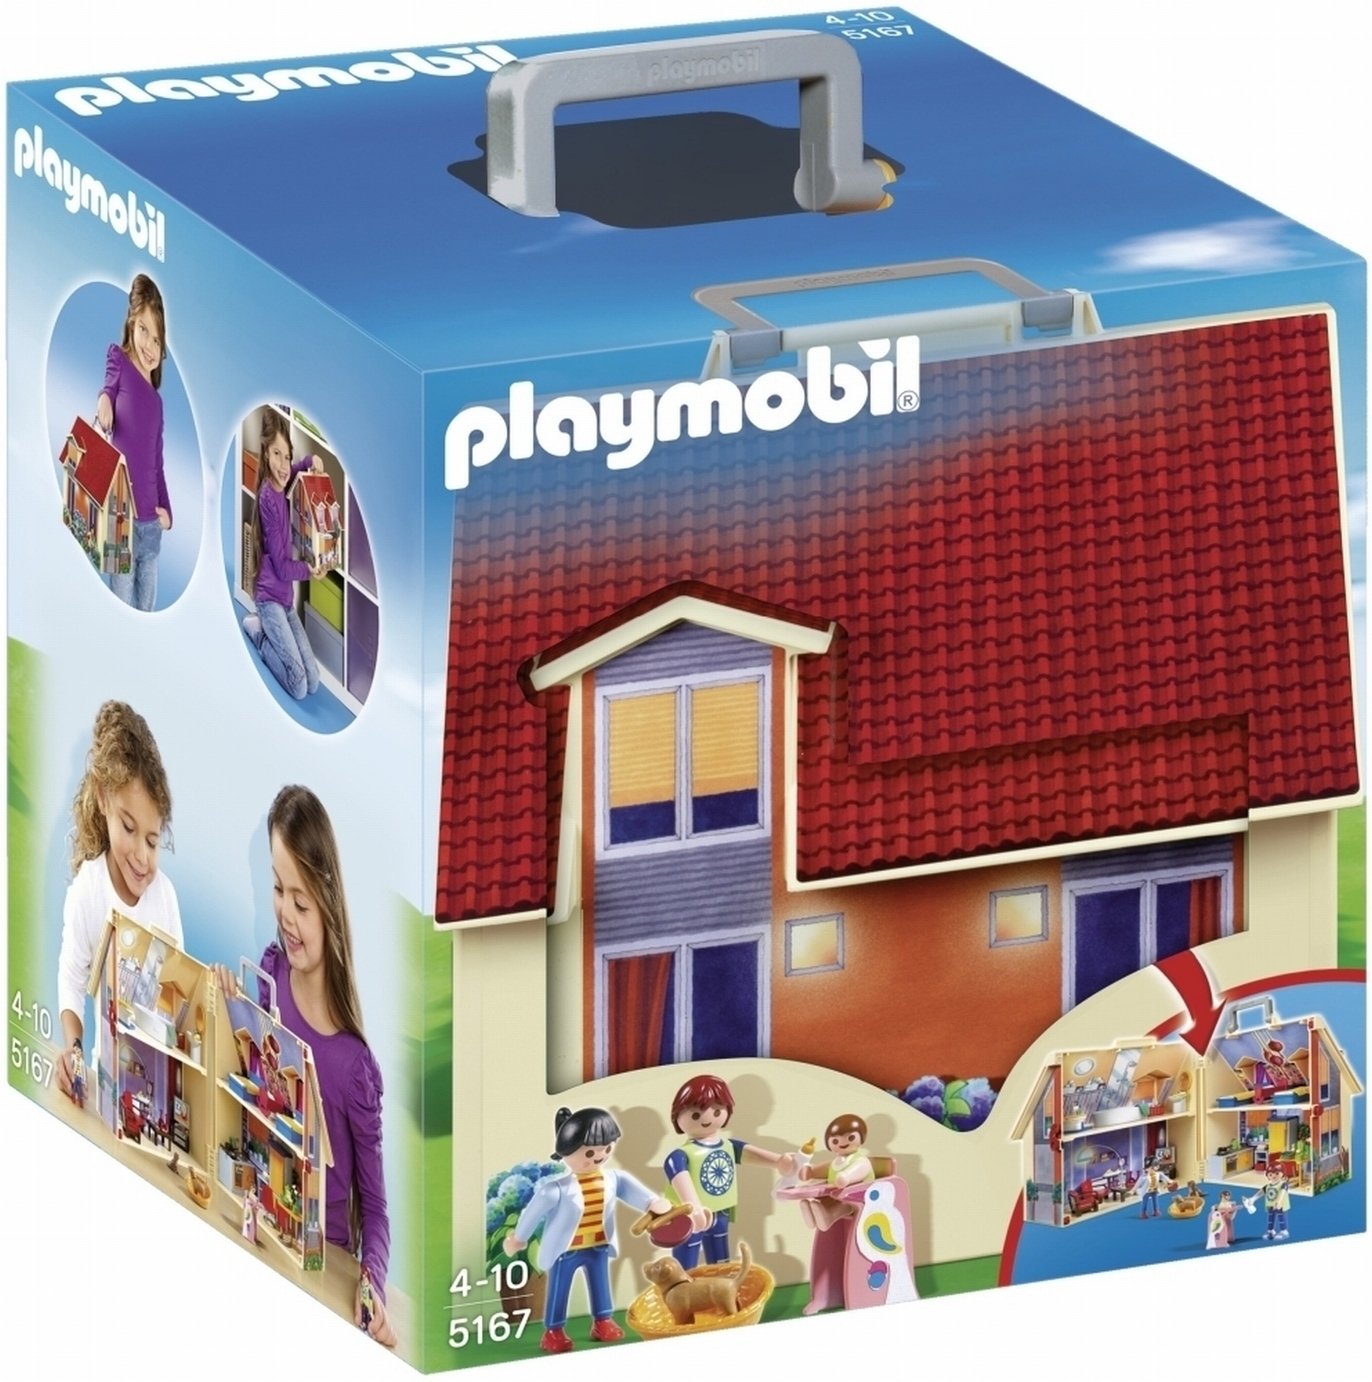 Playmobil 5167 Take Along Dolls House Playset Review